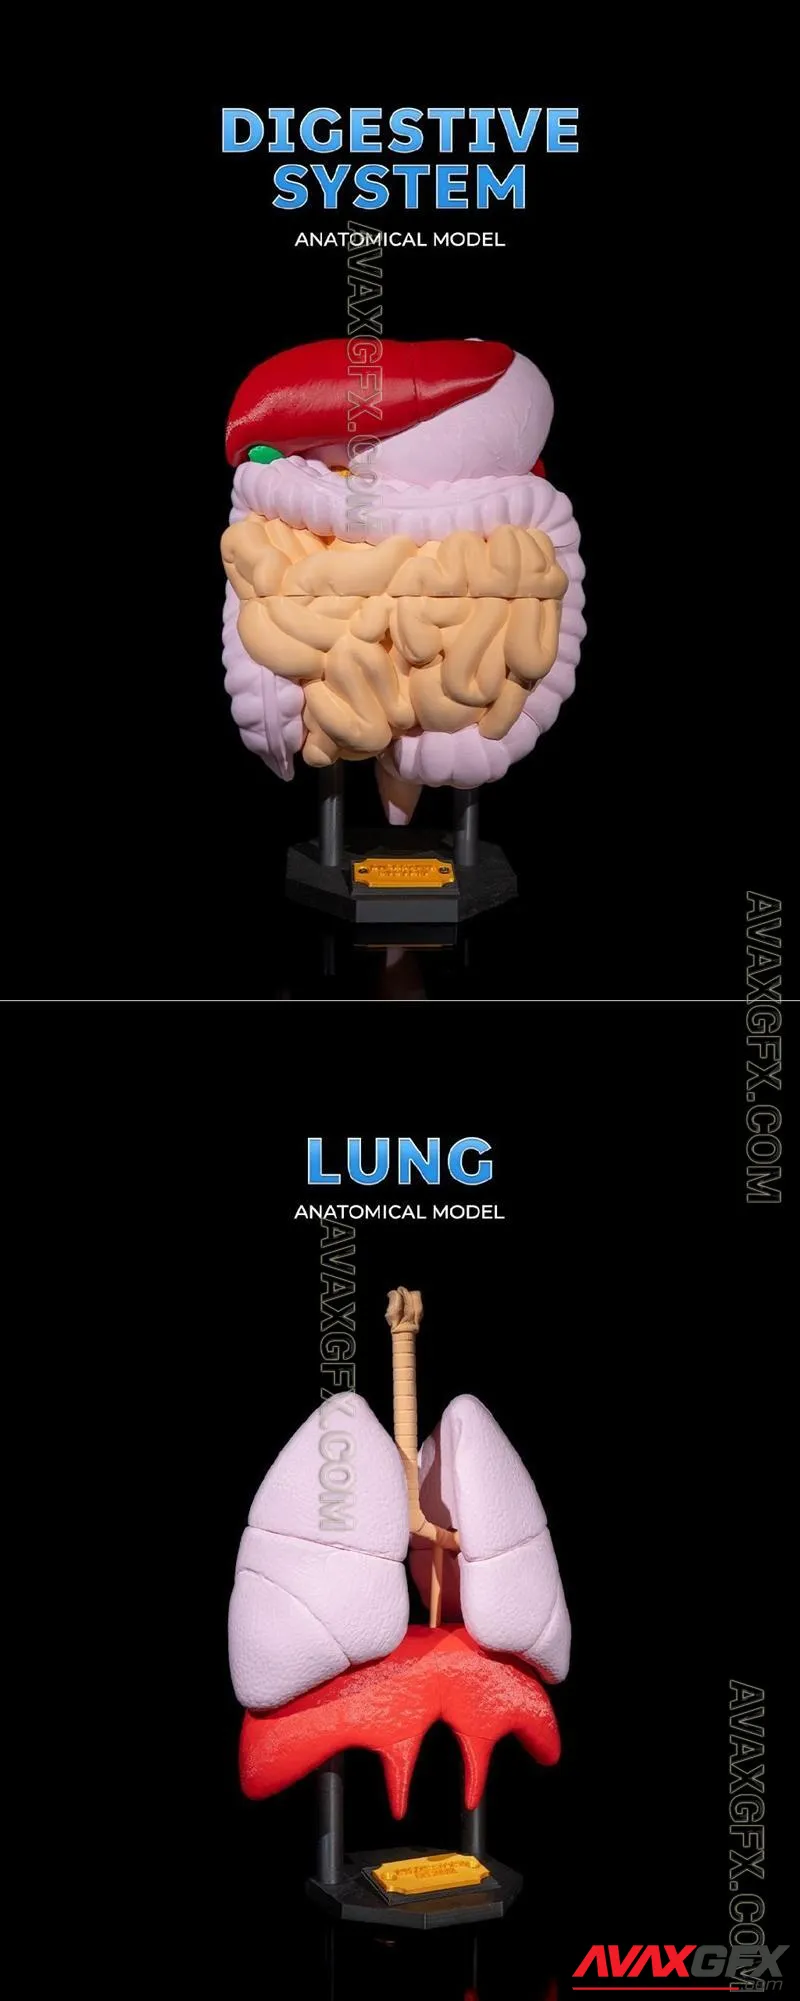 Digestive System Anatomical Model and Lung Anatomical Model - STL 3D Model